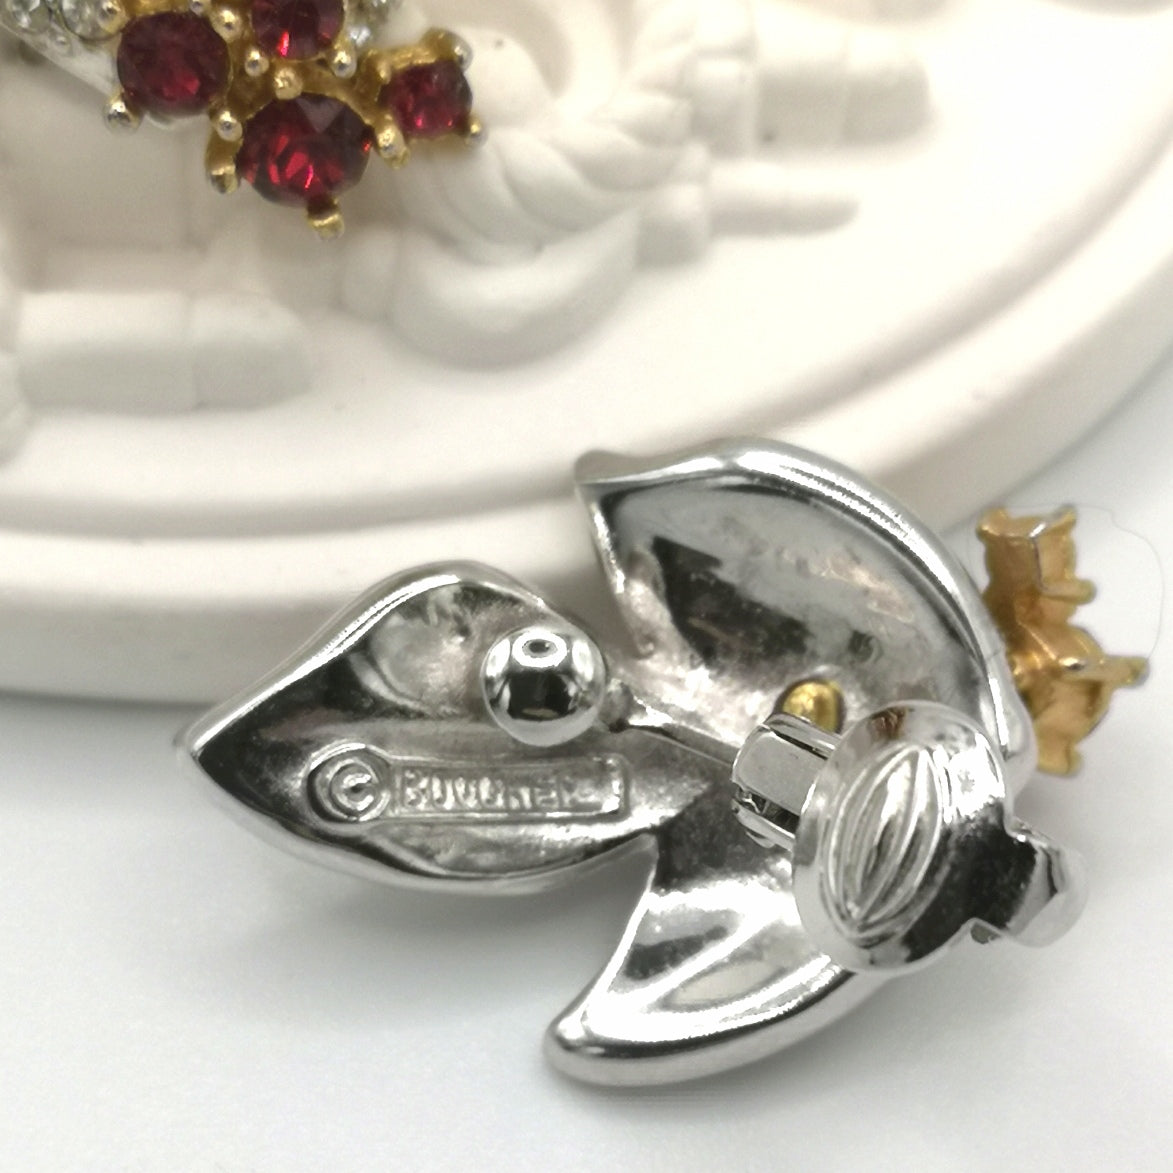 Vintage earrings firmed Boucher - back view of the jewel